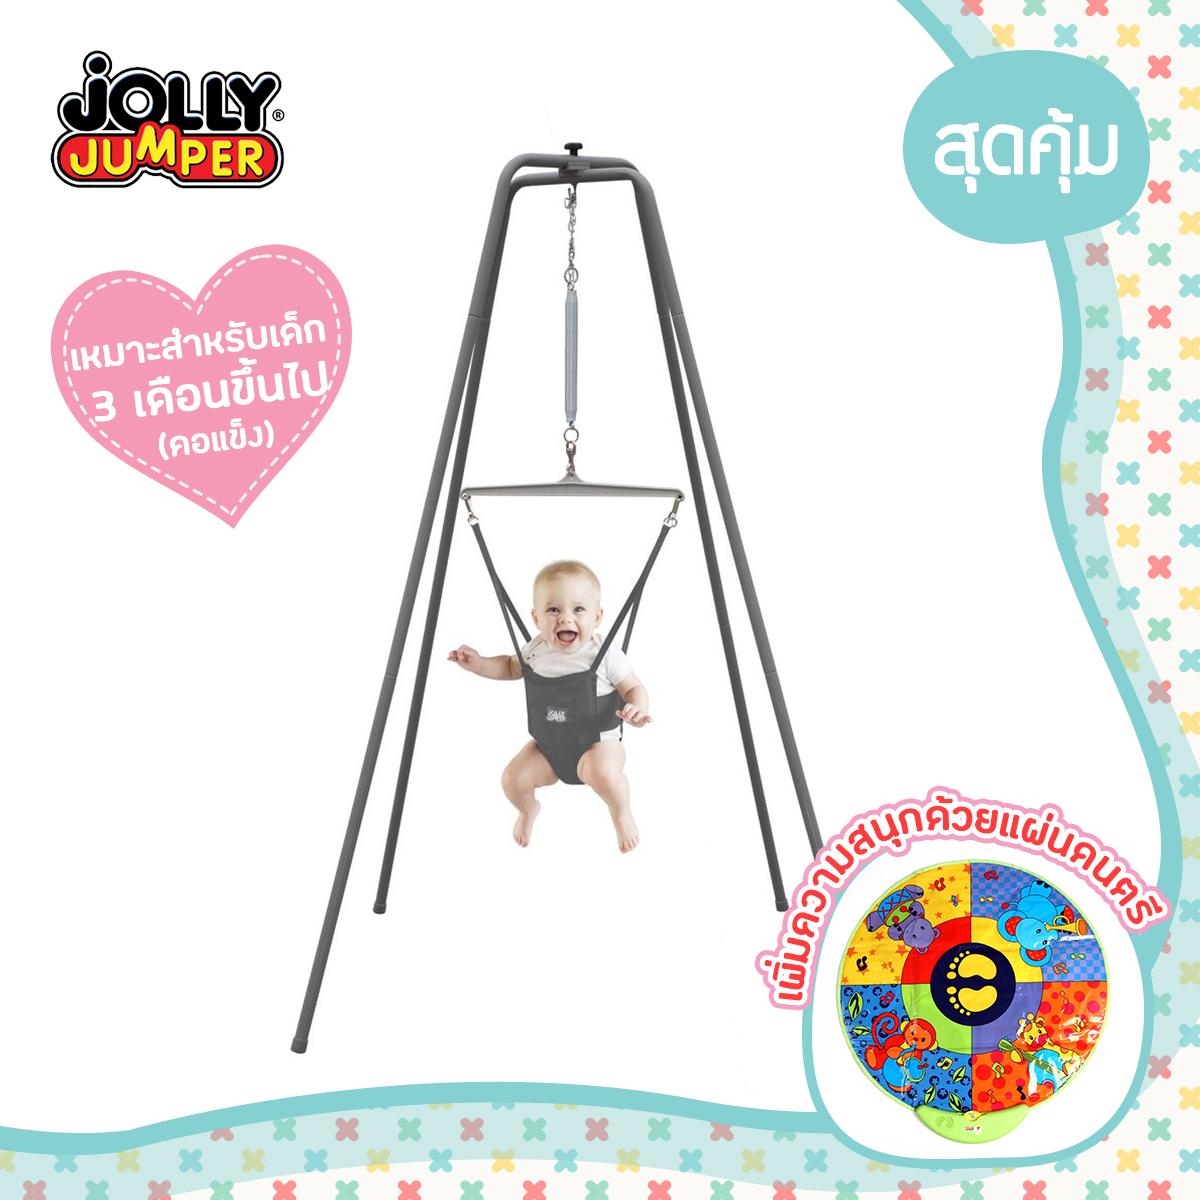 Jolly Jumper Super Stand จัมพ์เปอร์ รุ่น สูงพิเศษ เครื่องออกกำลังกายกระโดด สำหรับเด็กทารก อายุ 3 เดือนขึ้นไป + แผ่นดนตรี